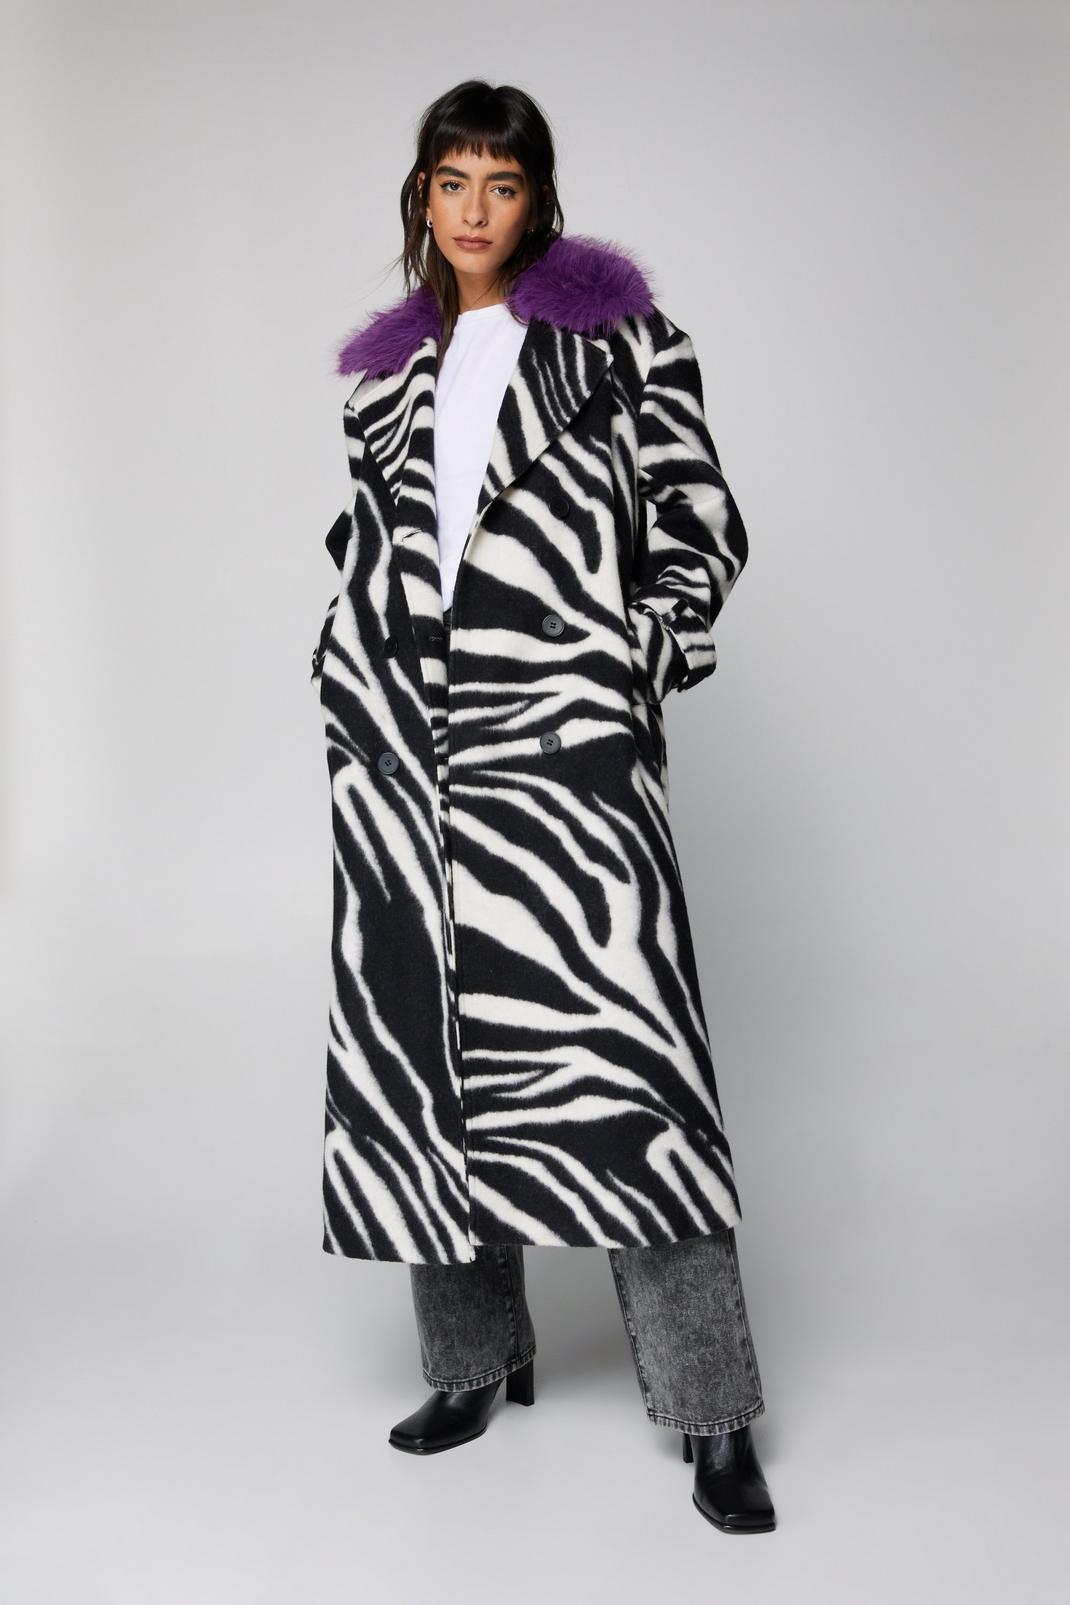 1960s Coats and Jackets Zebra Print Wool Blend Tailored Coat  AT vintagedancer.com